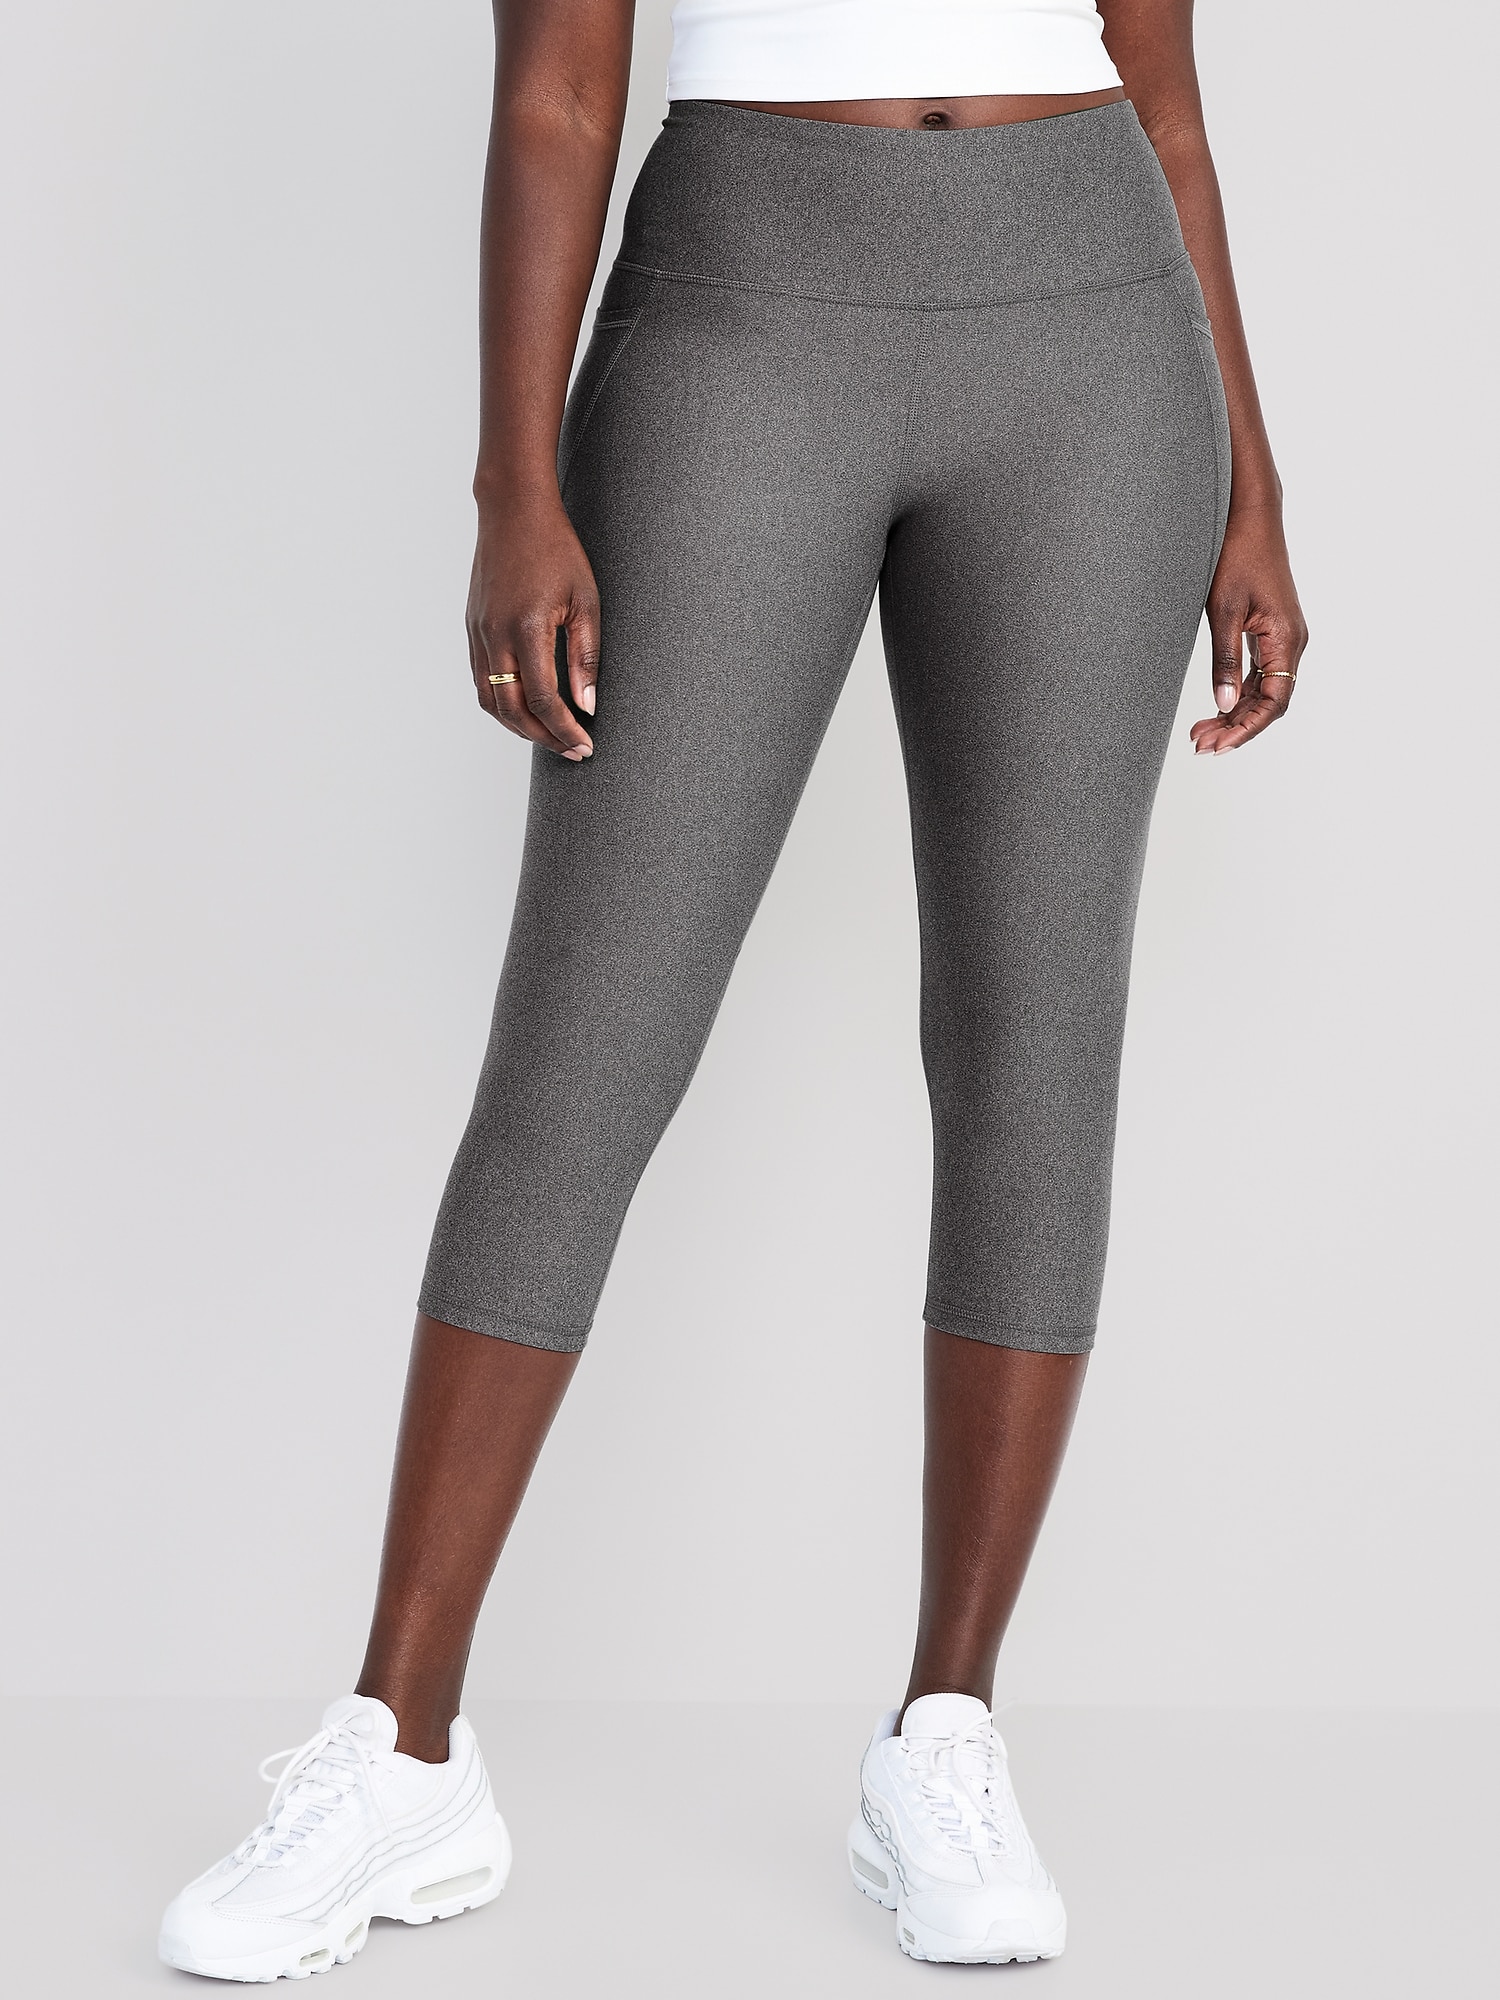 Plus Size Capri Leggings for Women with Pockets L-5X Workout Leggings Black  Mesh Yoga Pants High Waisted Tummy Control